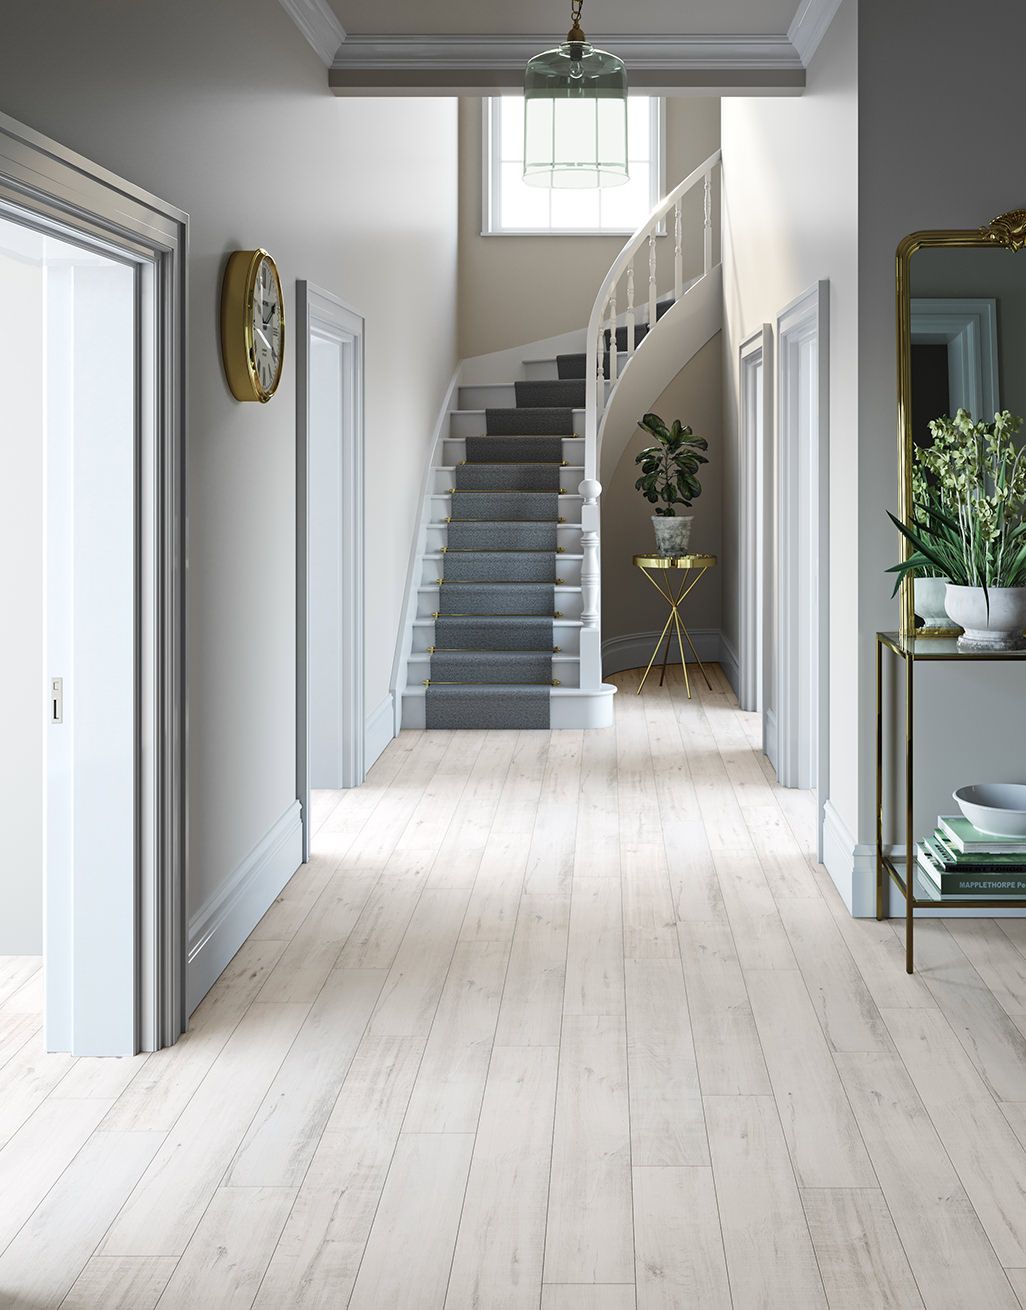 Gala Oak White Laminate Flooring, Images Of Laminate Flooring In Hallways